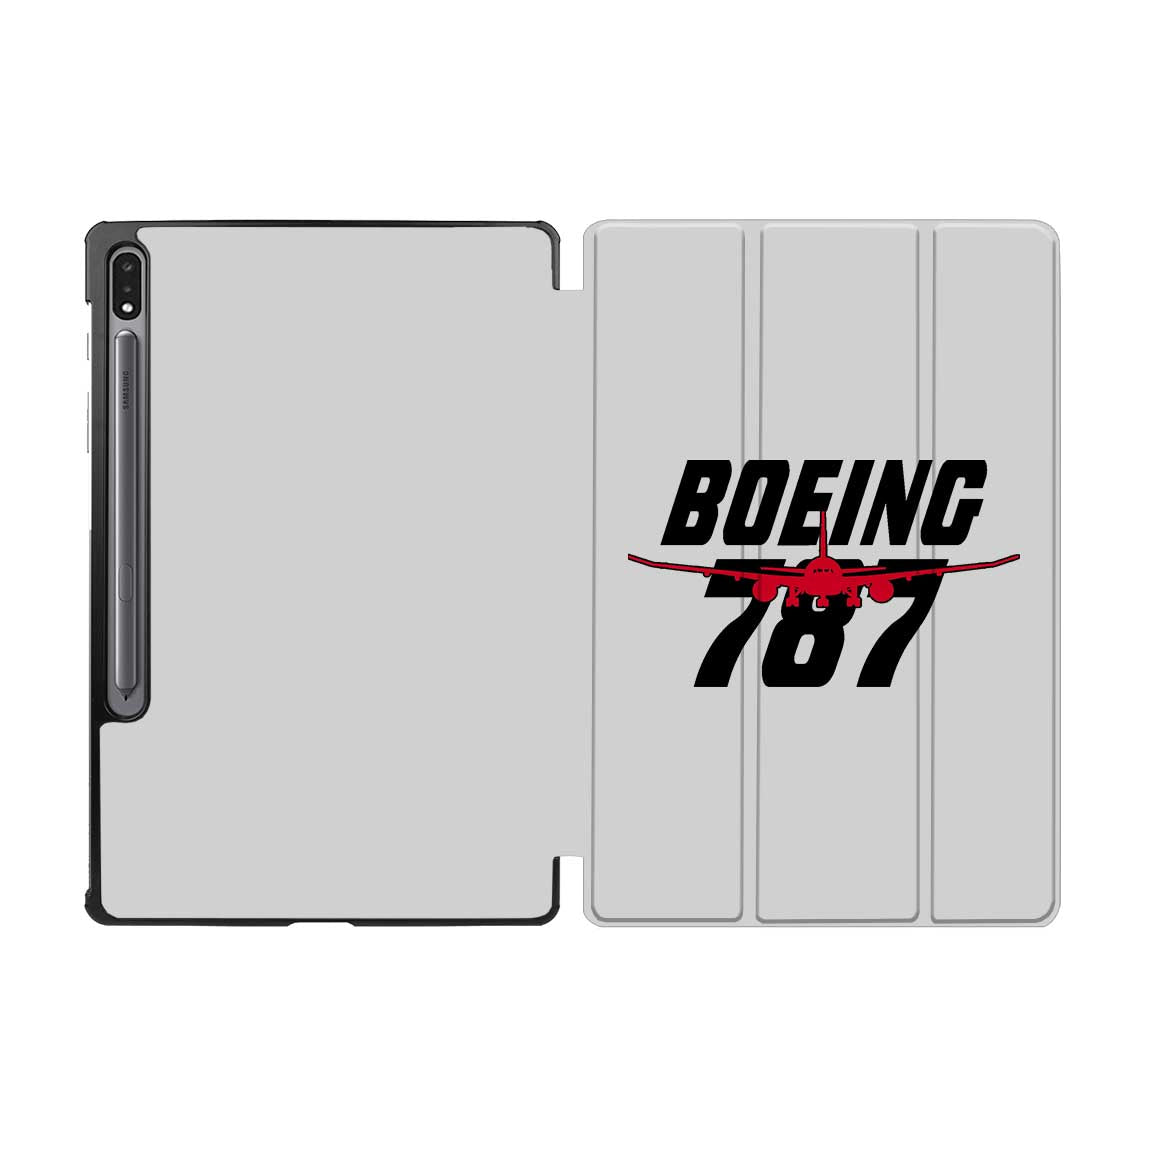 Amazing Boeing 787 Designed Samsung Tablet Cases